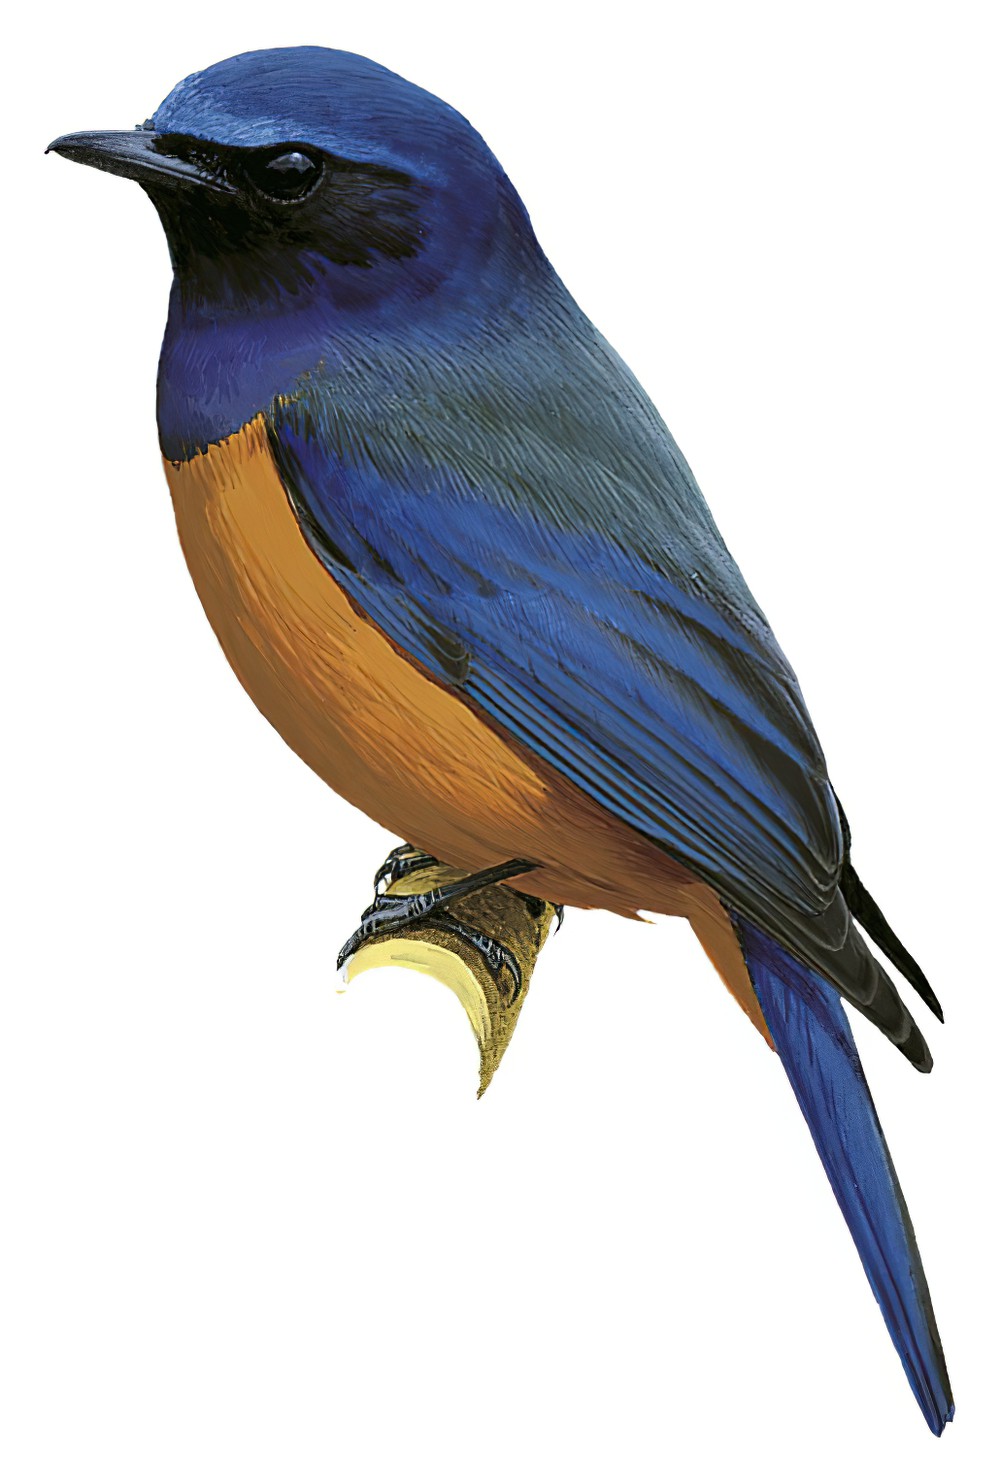 Timor Blue Flycatcher / Cyornis hyacinthinus